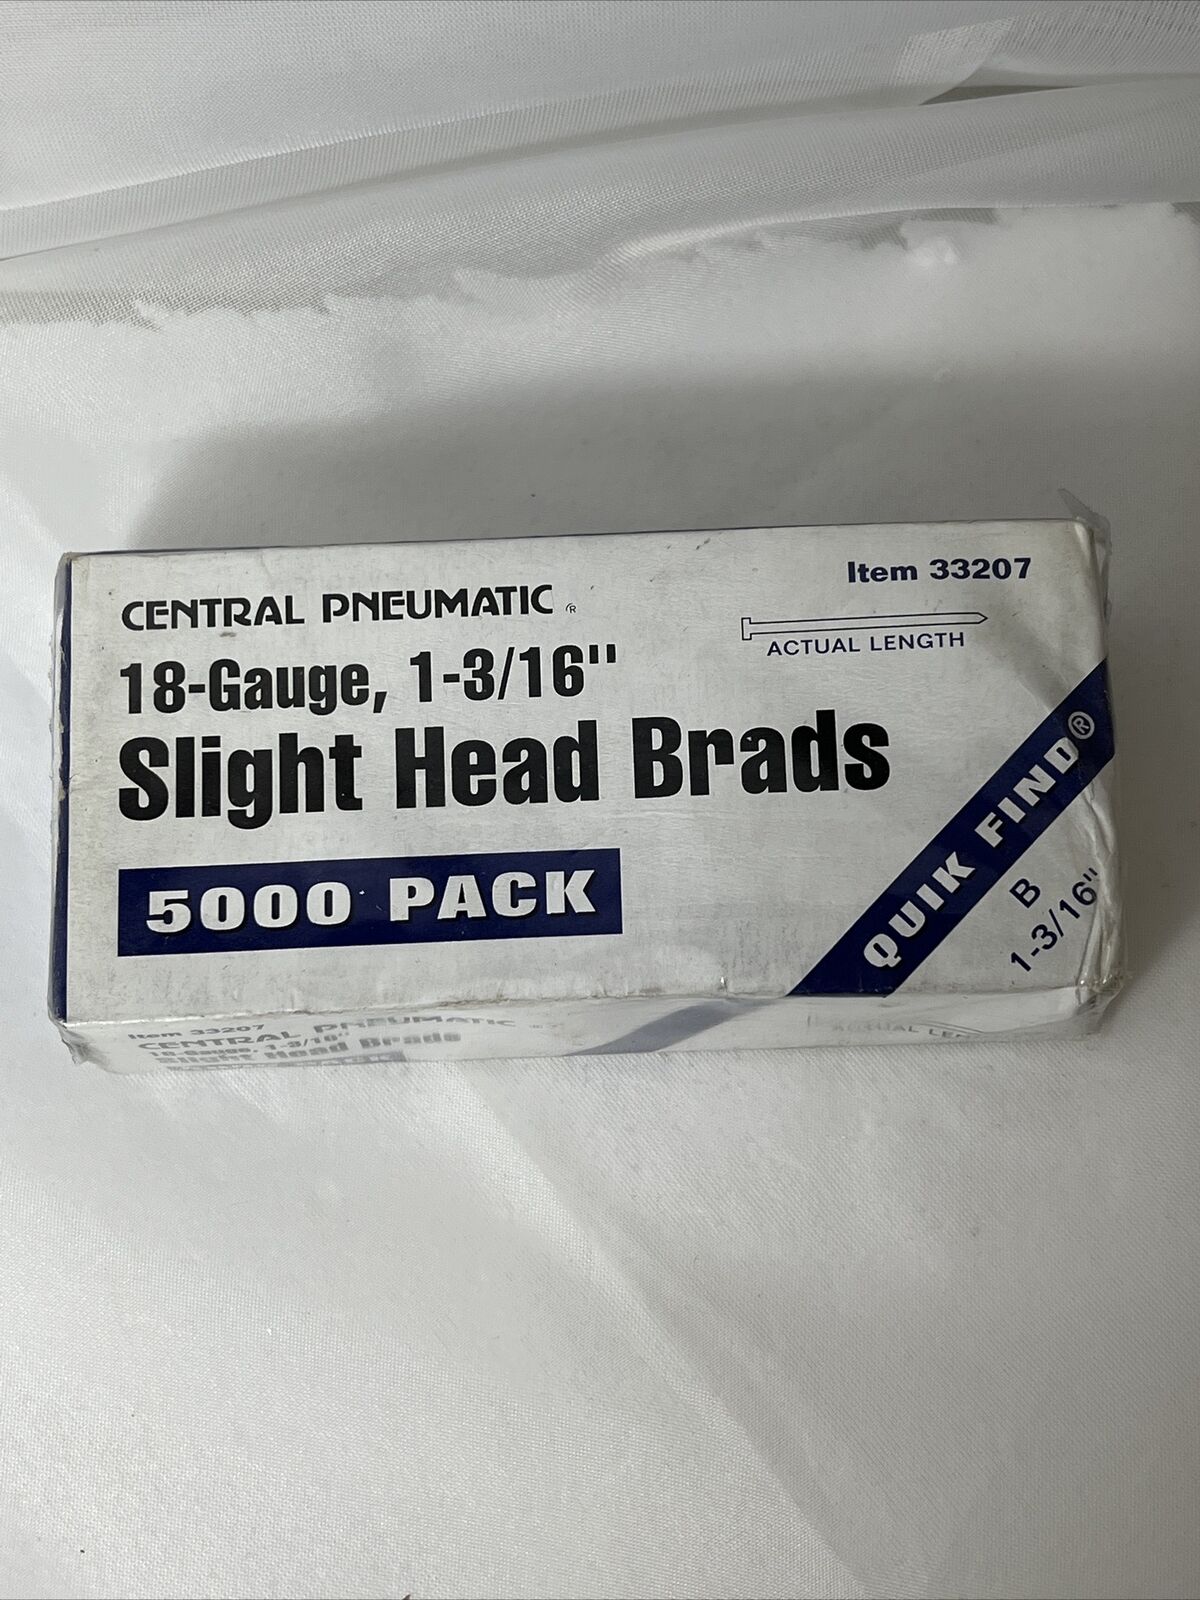 Central Pneumatic 18 Gauge 1-3/16” Slight Head Brads Unopened Box Item 33207